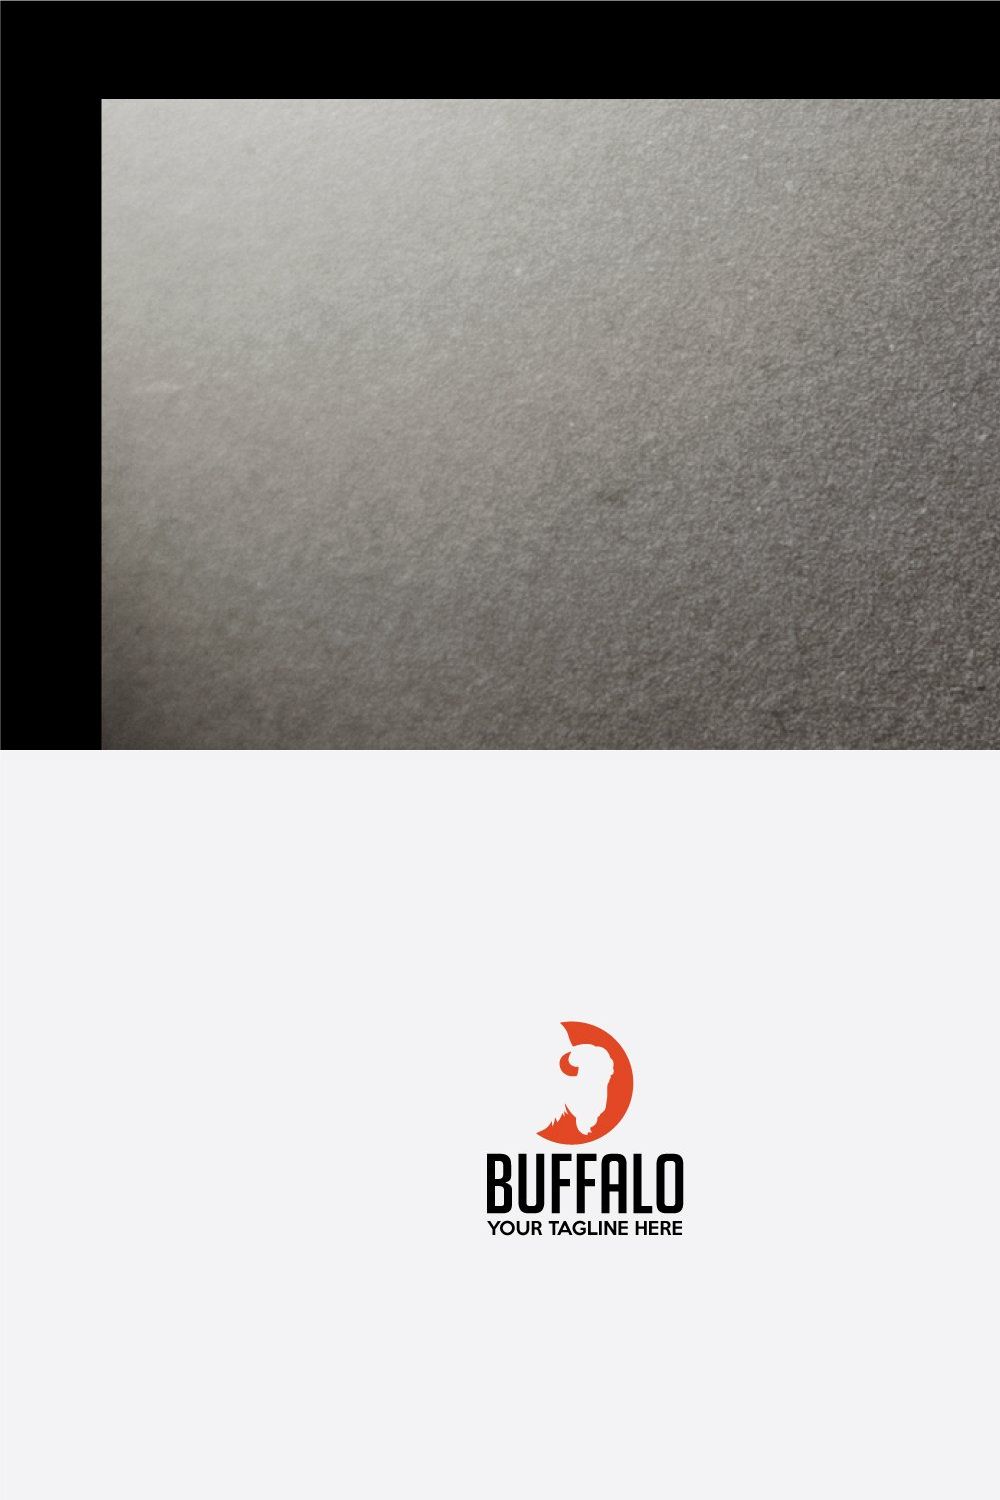 buffalo pinterest preview image.